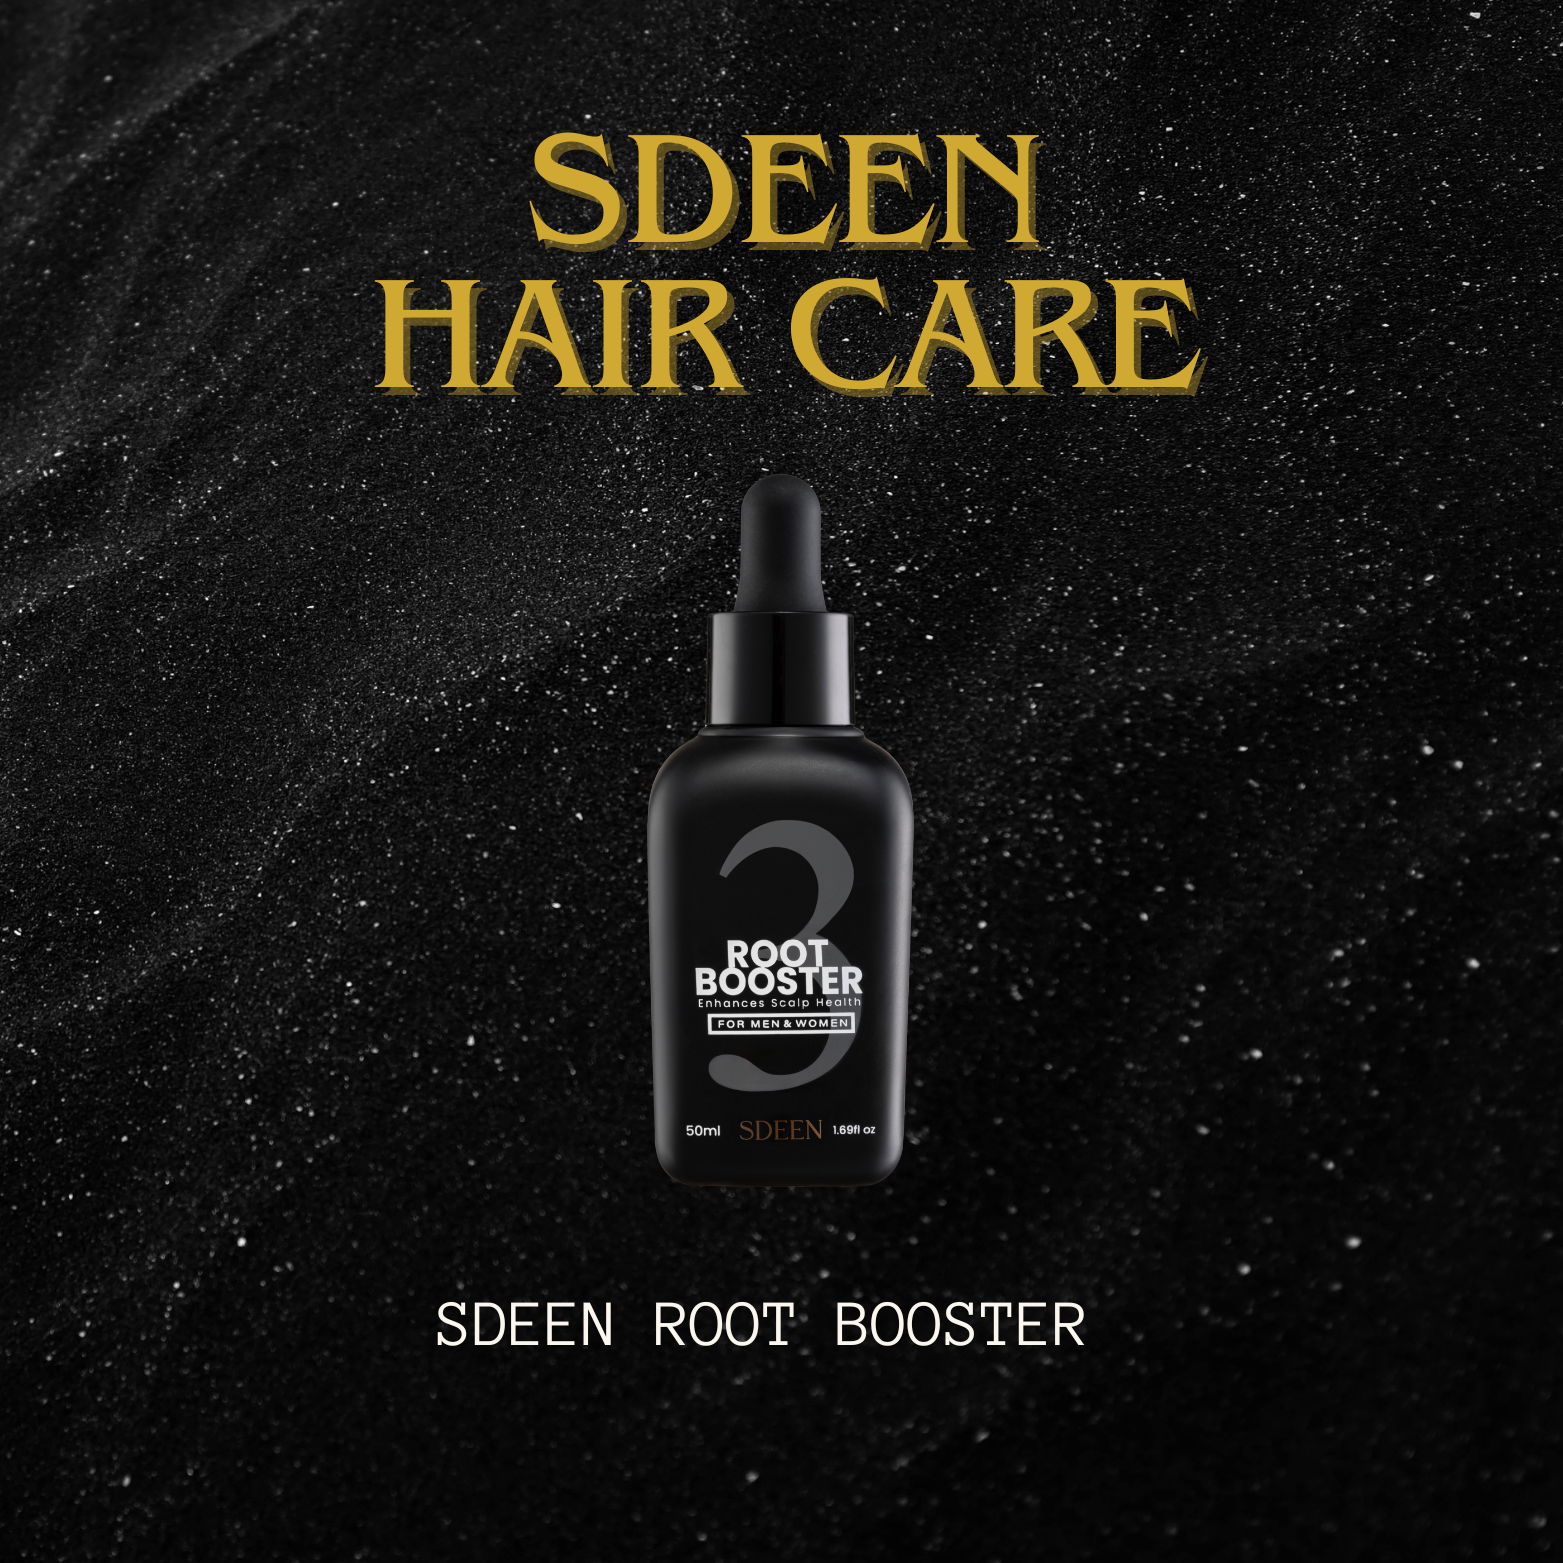 sdeen hair care (4)